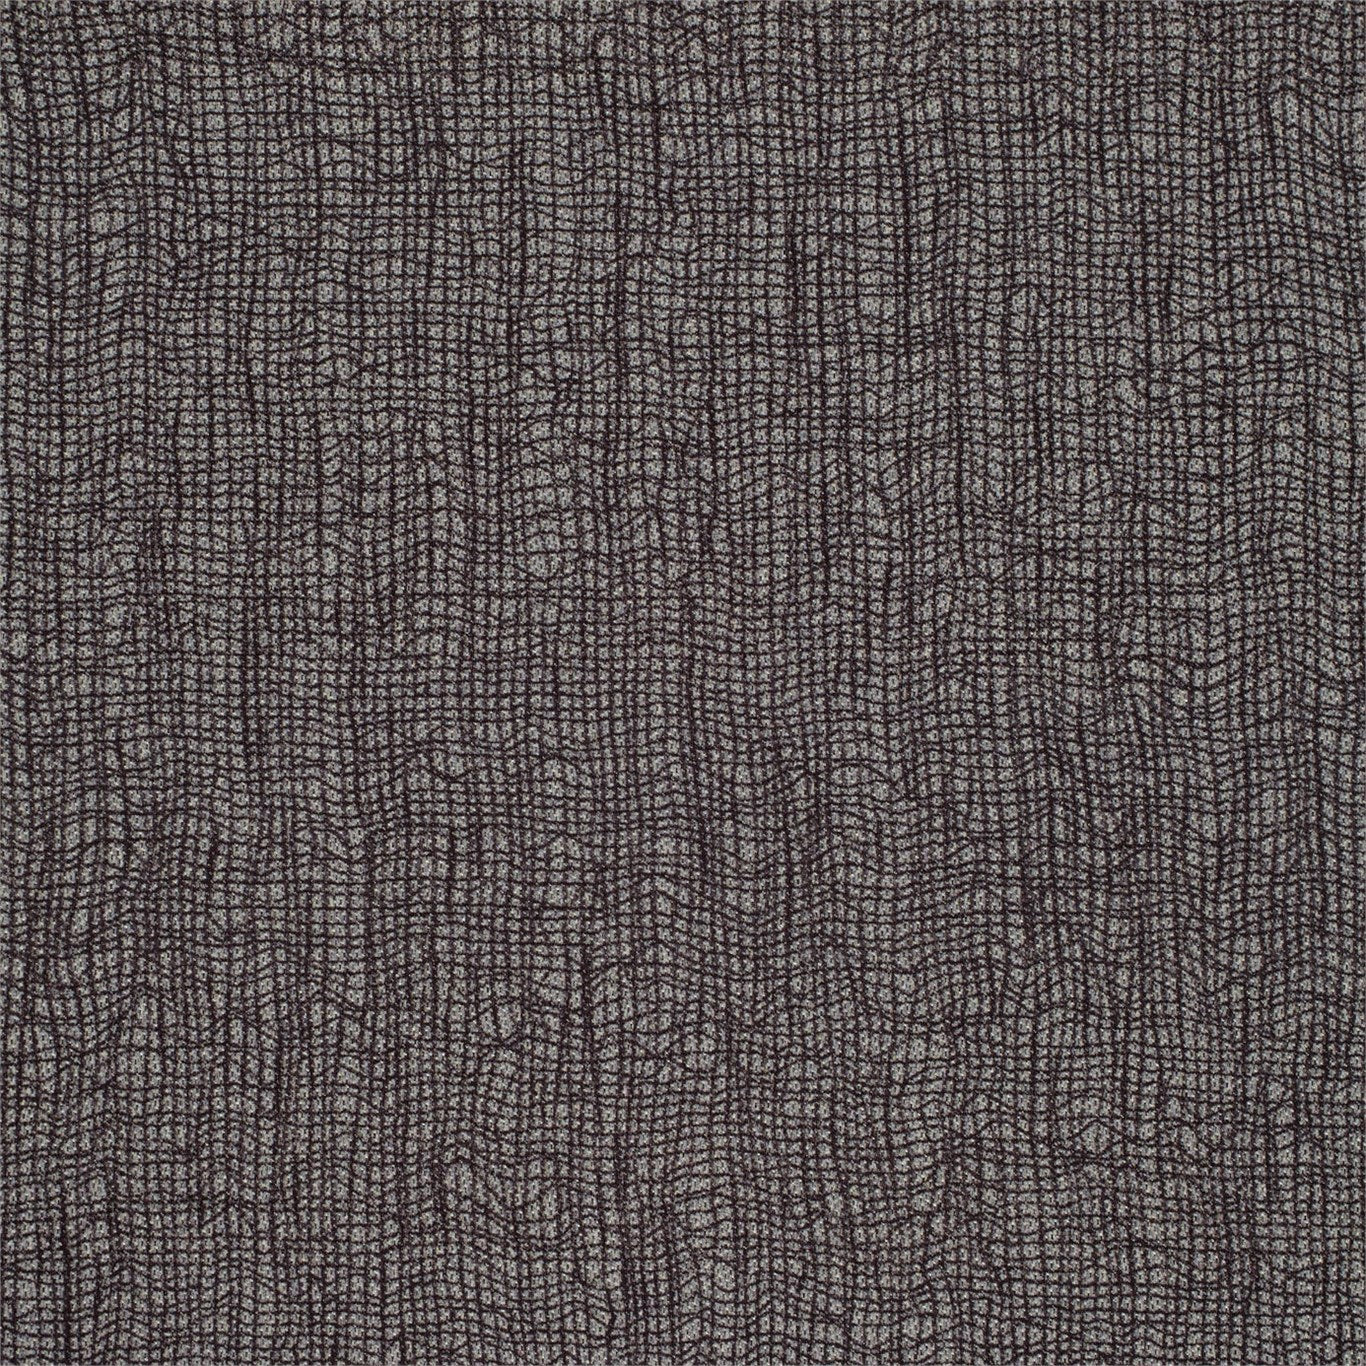 Mesh Fabric by Harlequin